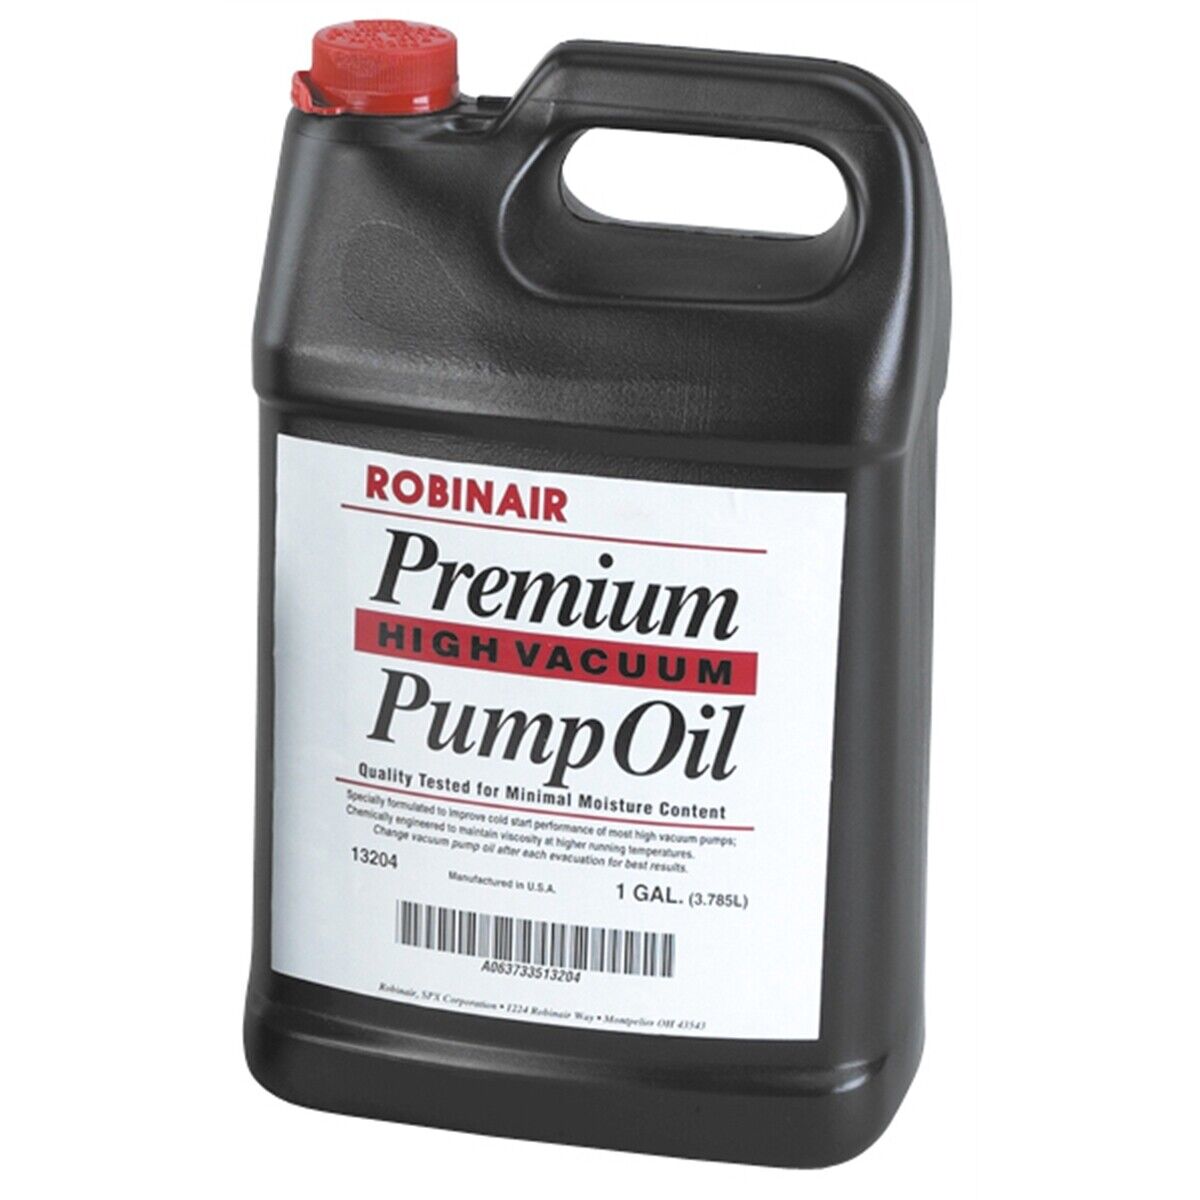 Robinair 13204 Premium High Vacuum Pump Oil